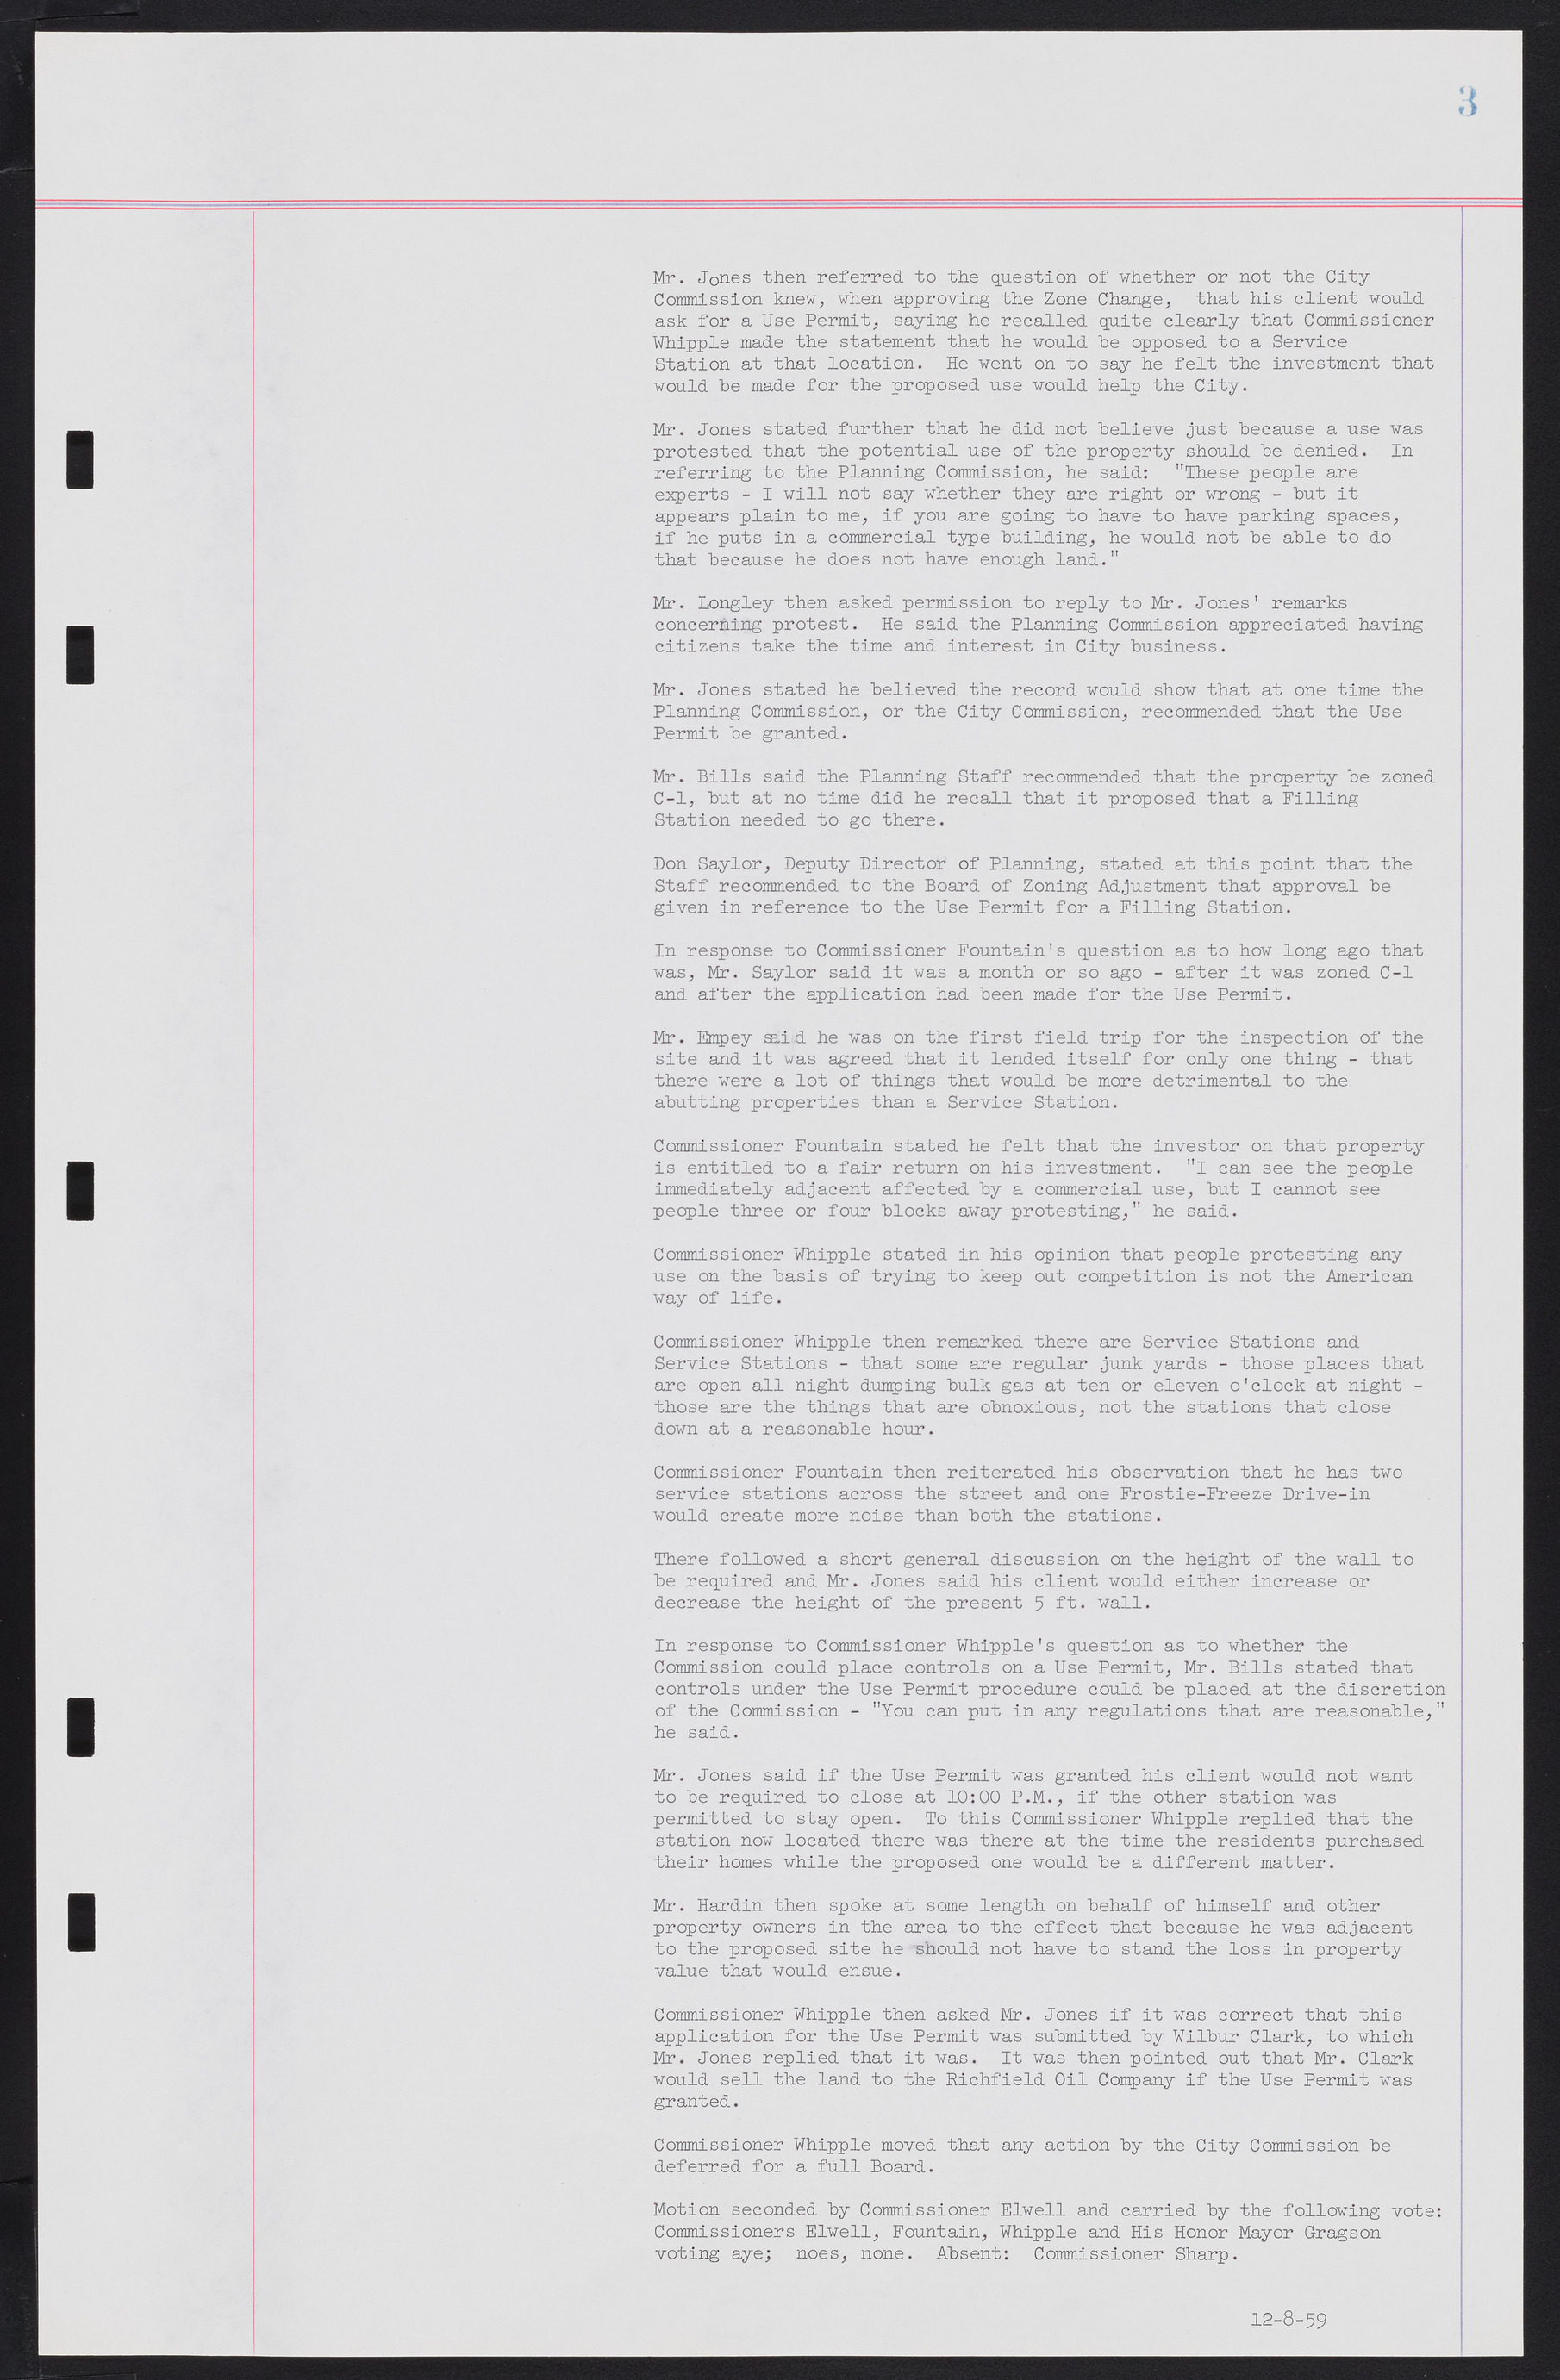 Las Vegas City Commission Minutes, December 8, 1959 to February 17, 1960, lvc000012-7